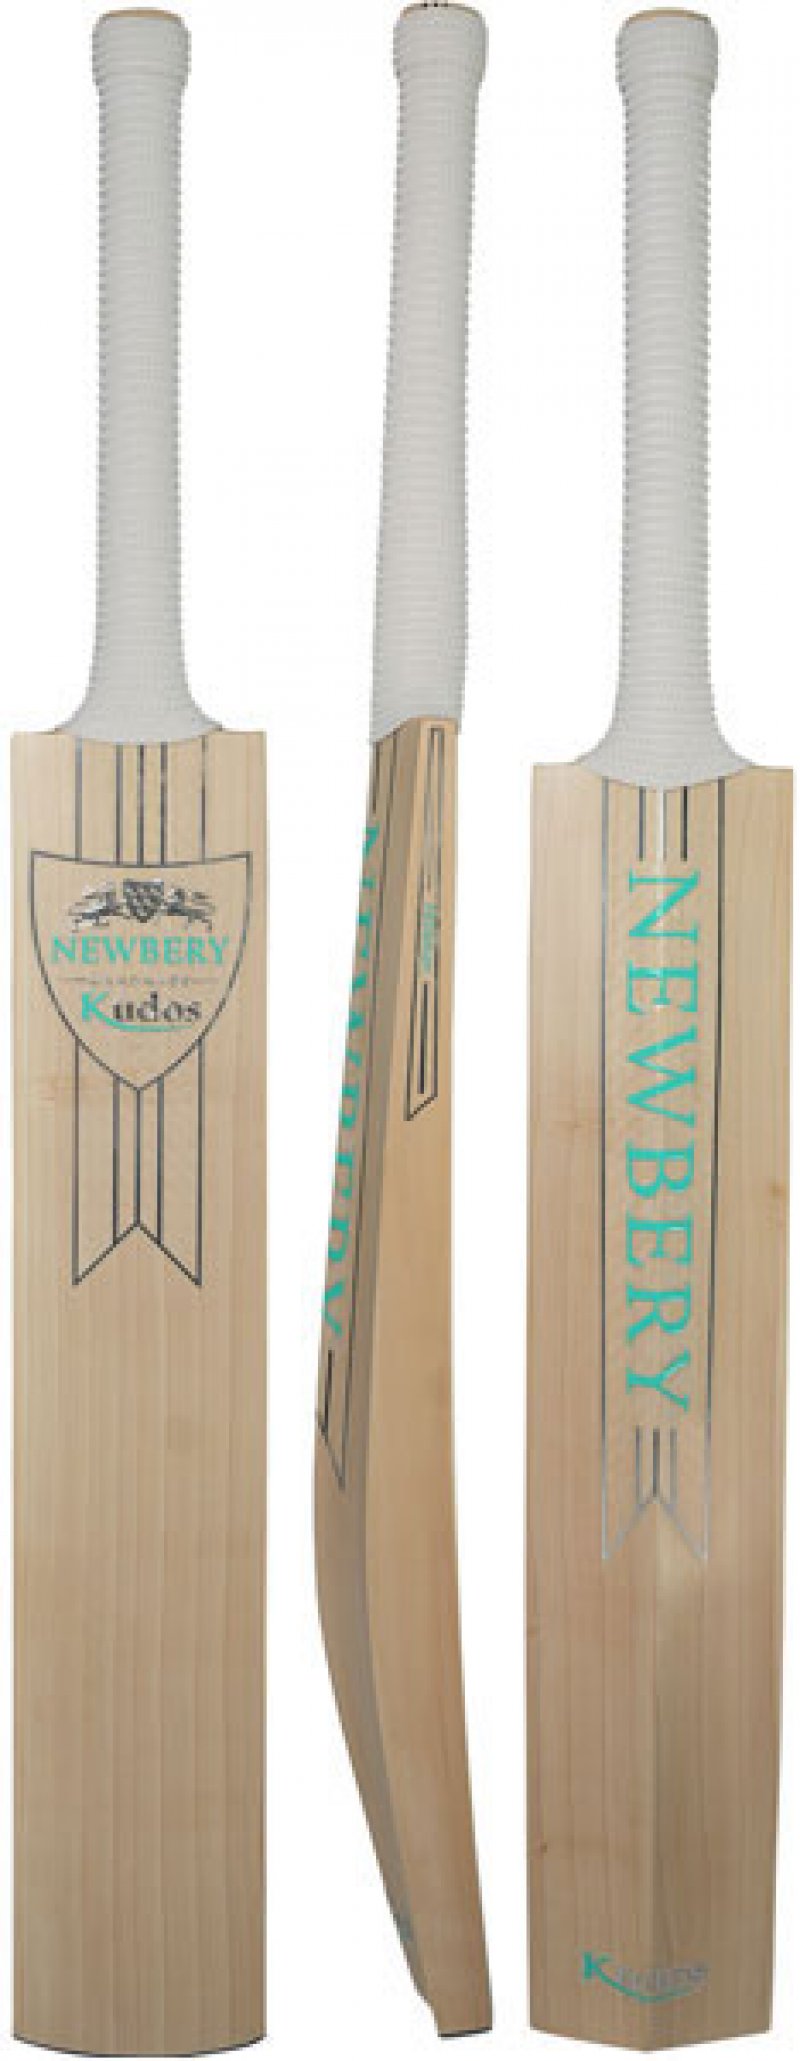 Newbery Kudos 5 Star Cricket Bat